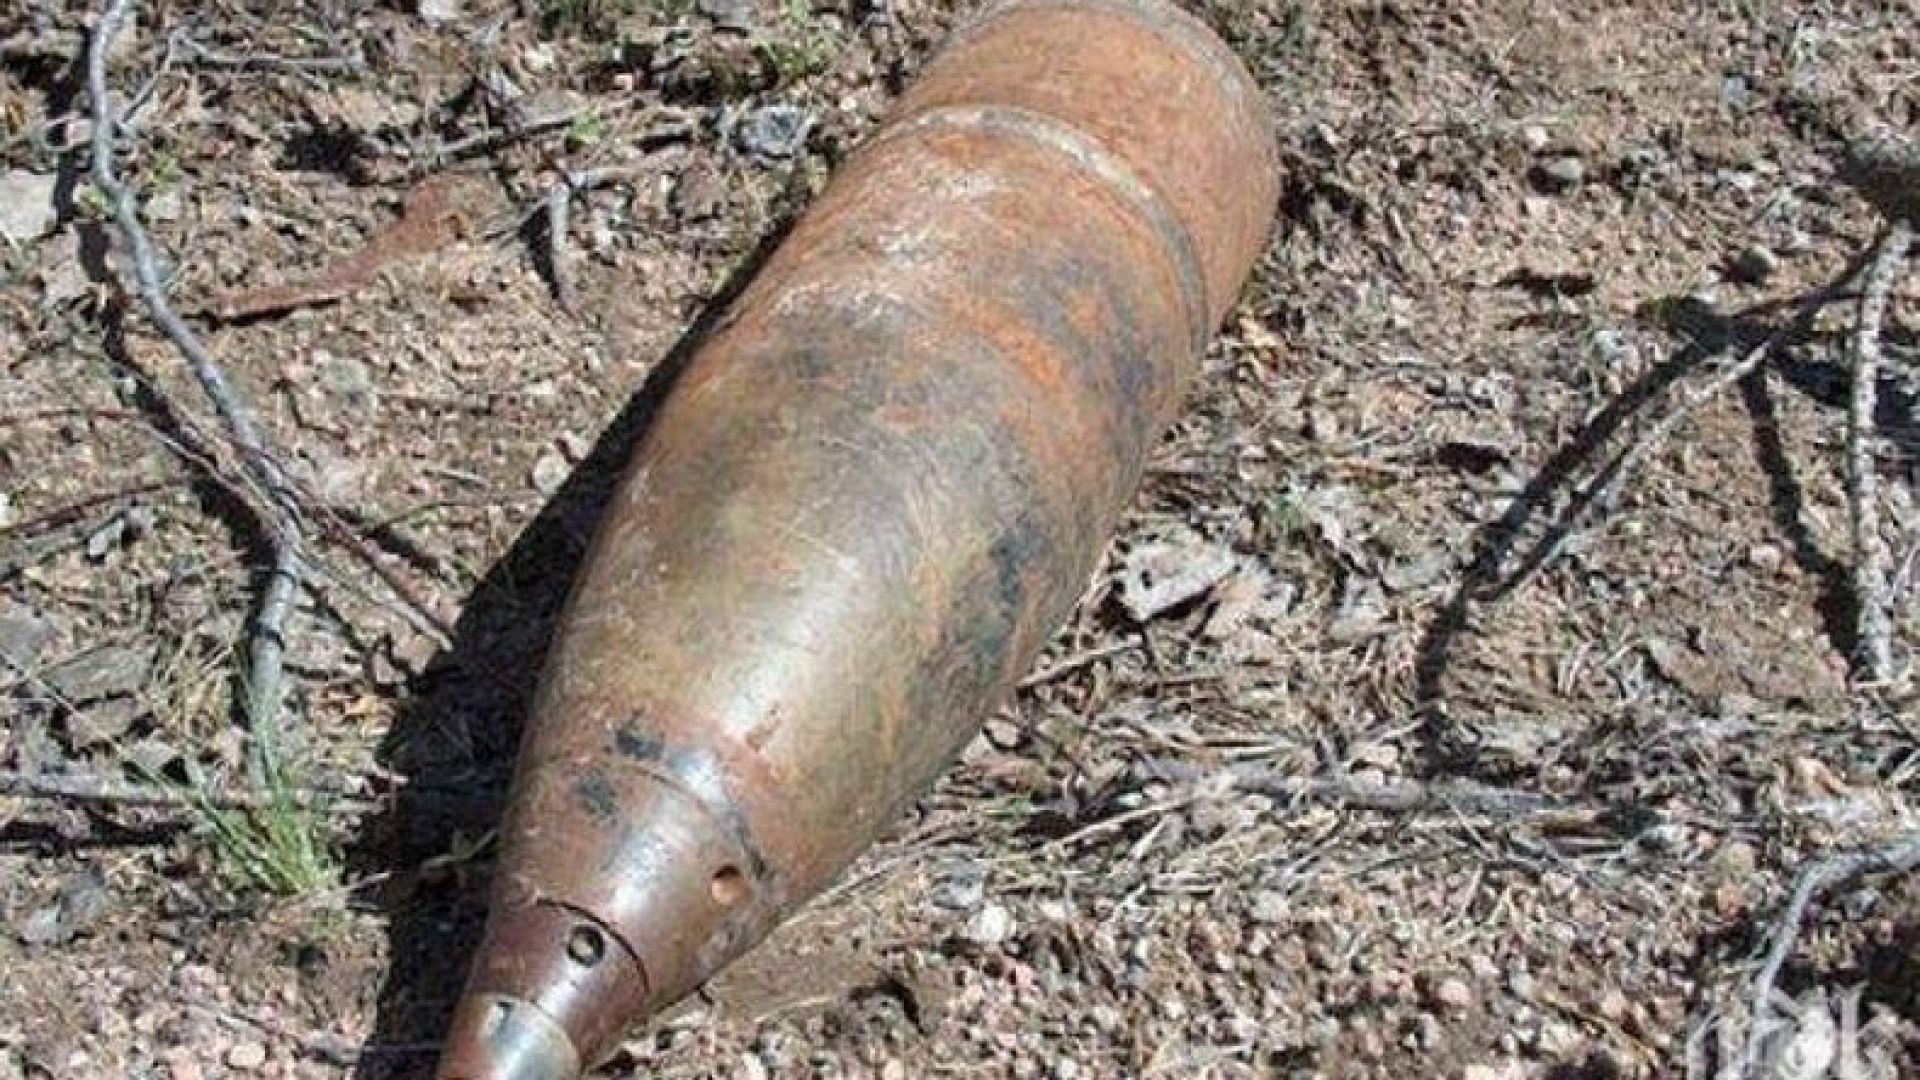 Откриха снаряд в училищен двор в Пловдив